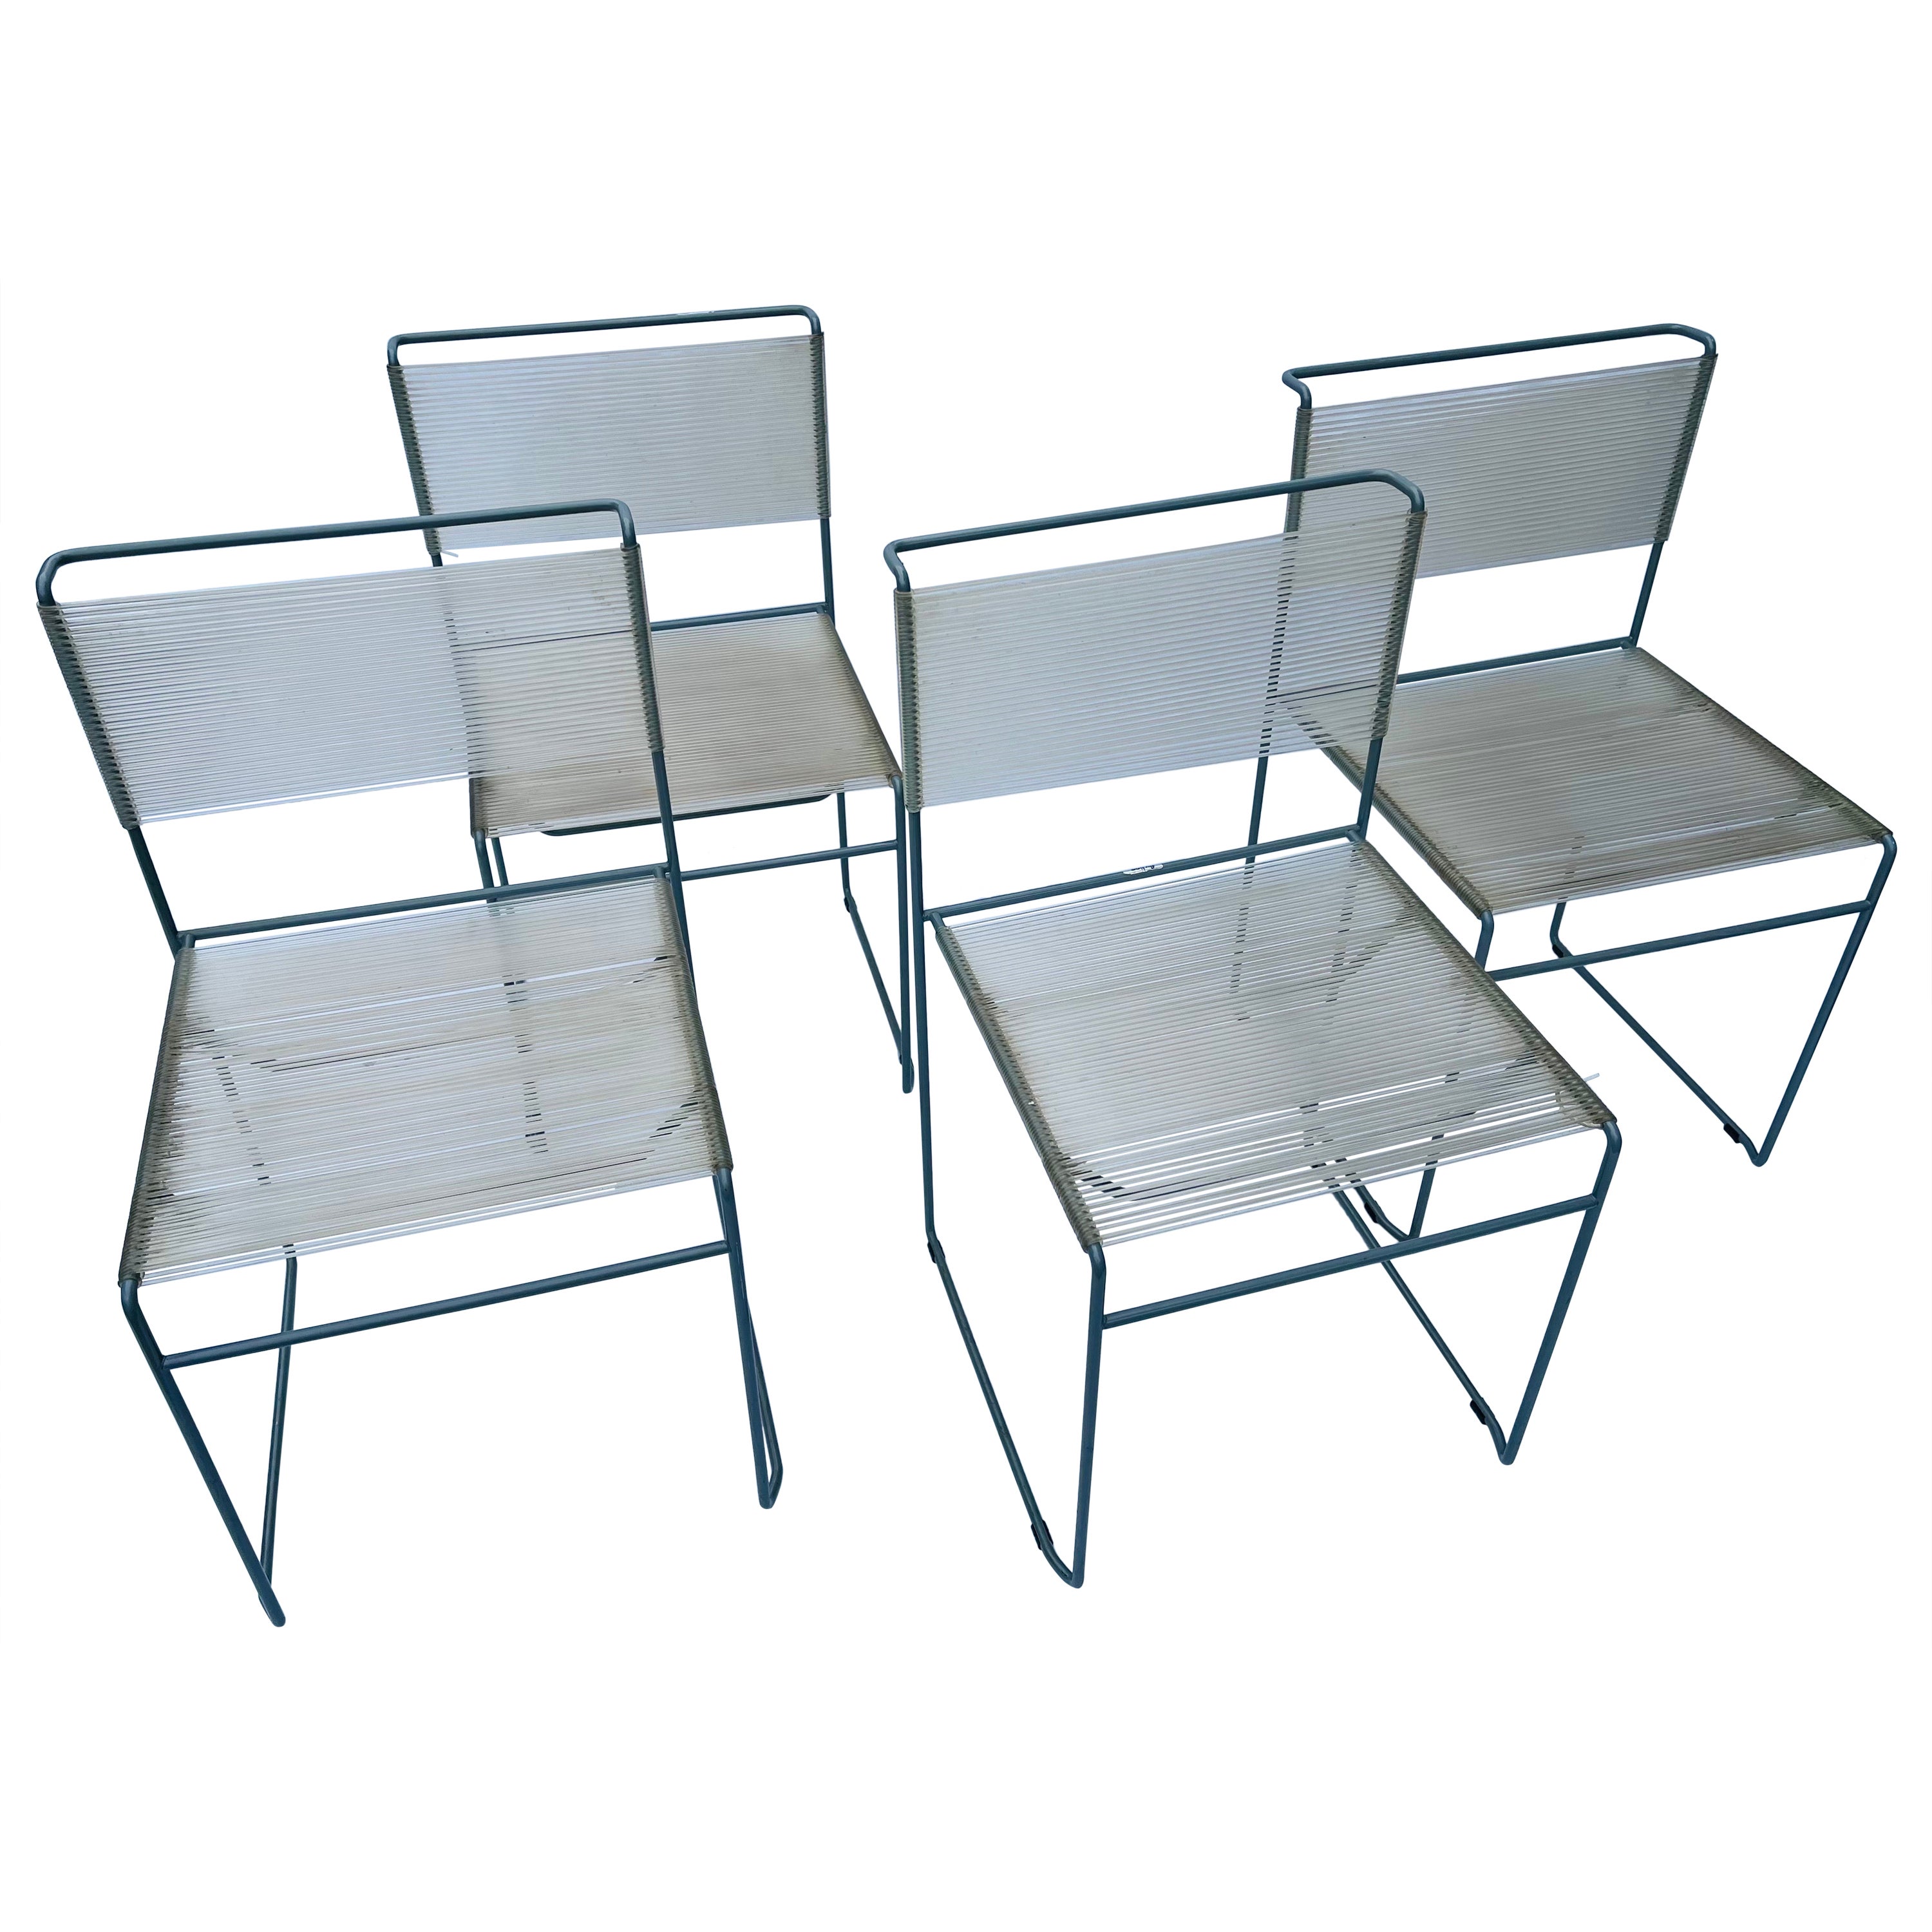 Ensemble de quatre chaises à sangles spaghetti Fly Line de Giandomenico Belotti, design italien